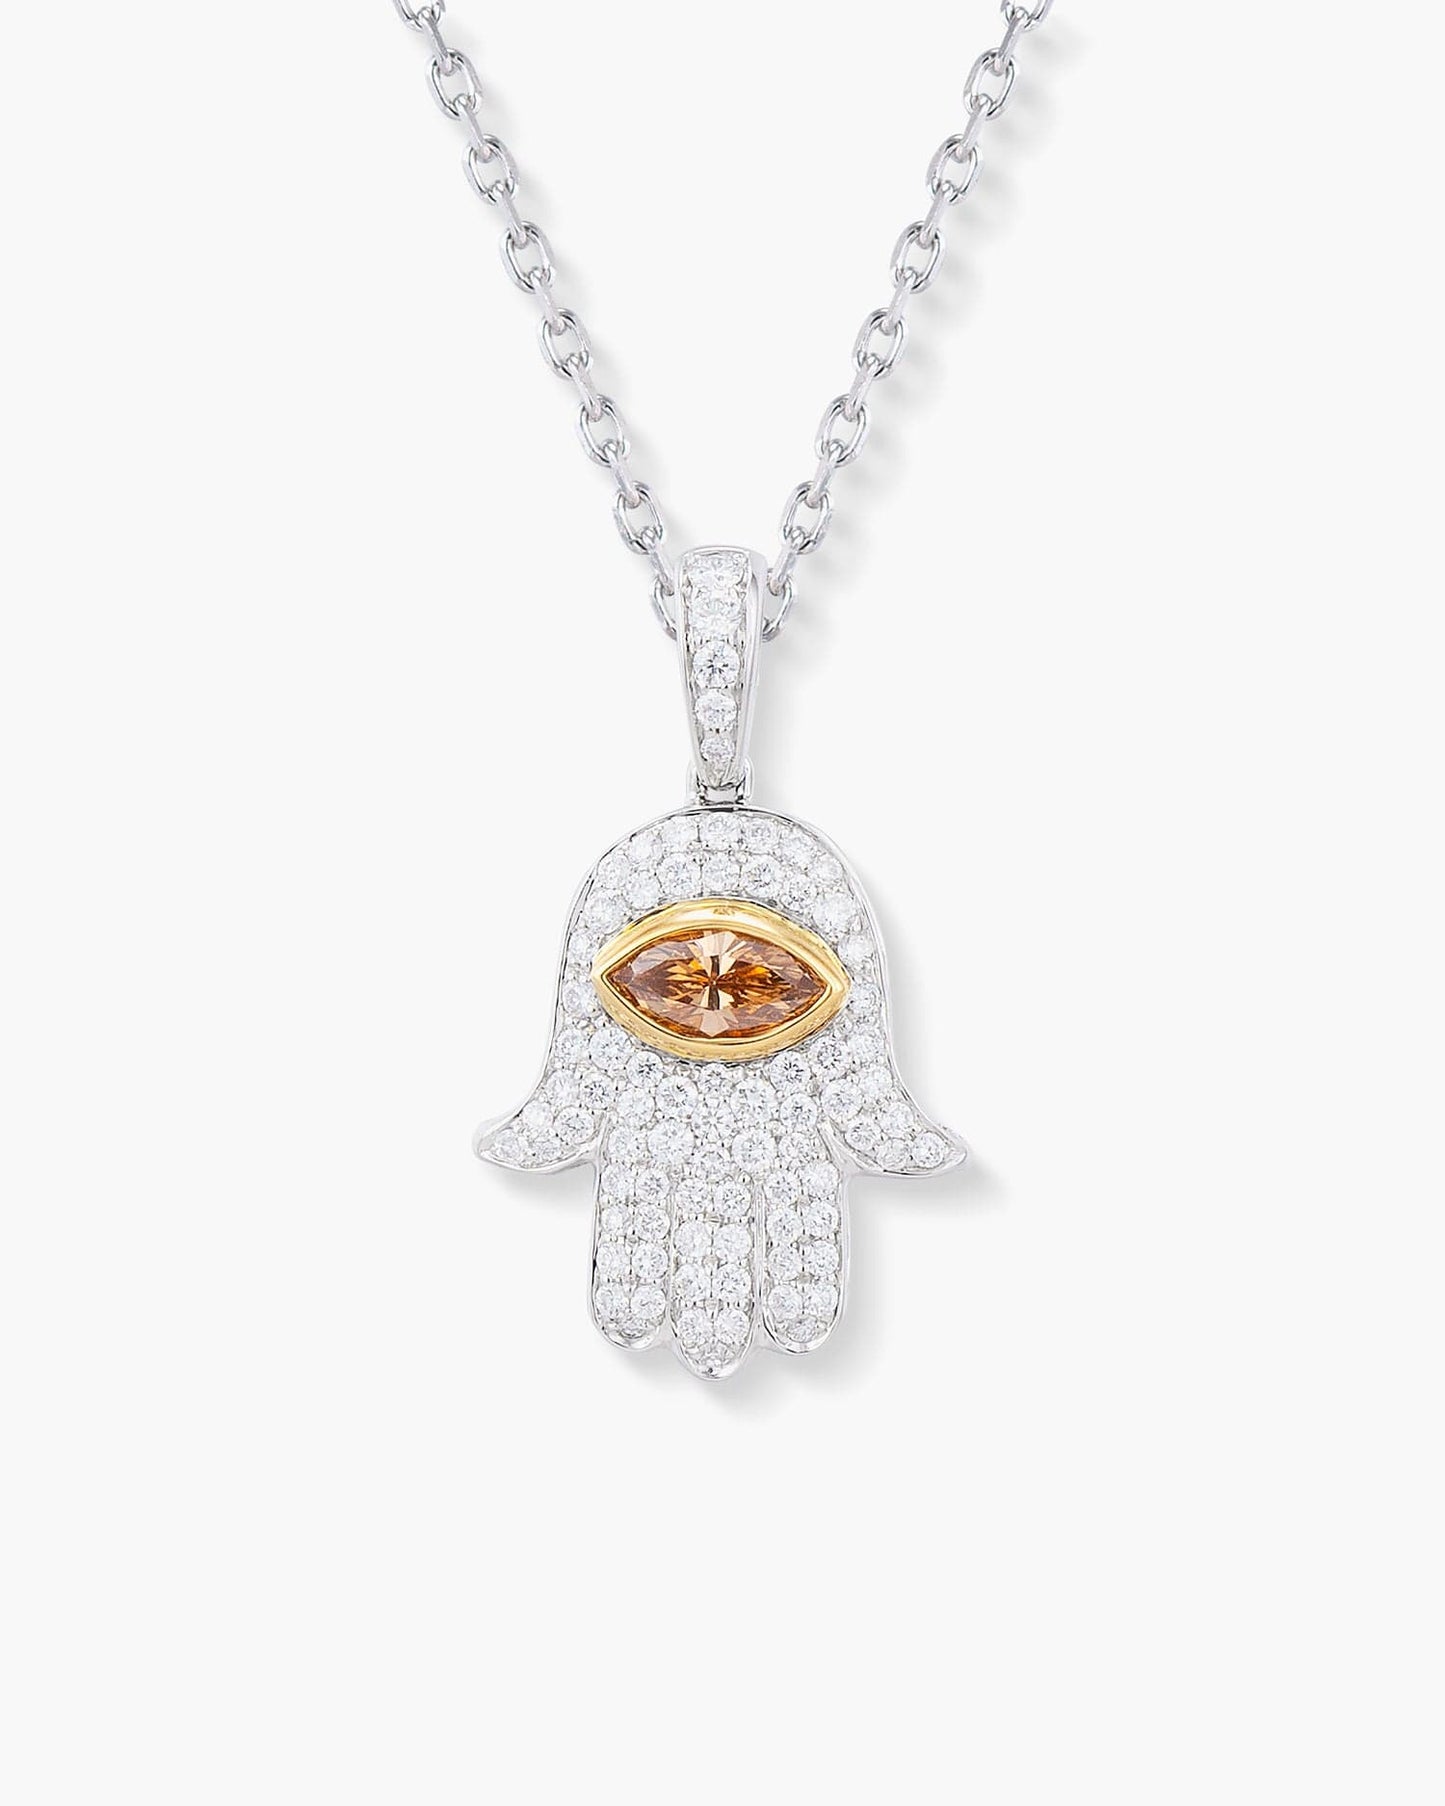 Brown and White Diamond Hamsa Pendant Necklace, 0.79 carats